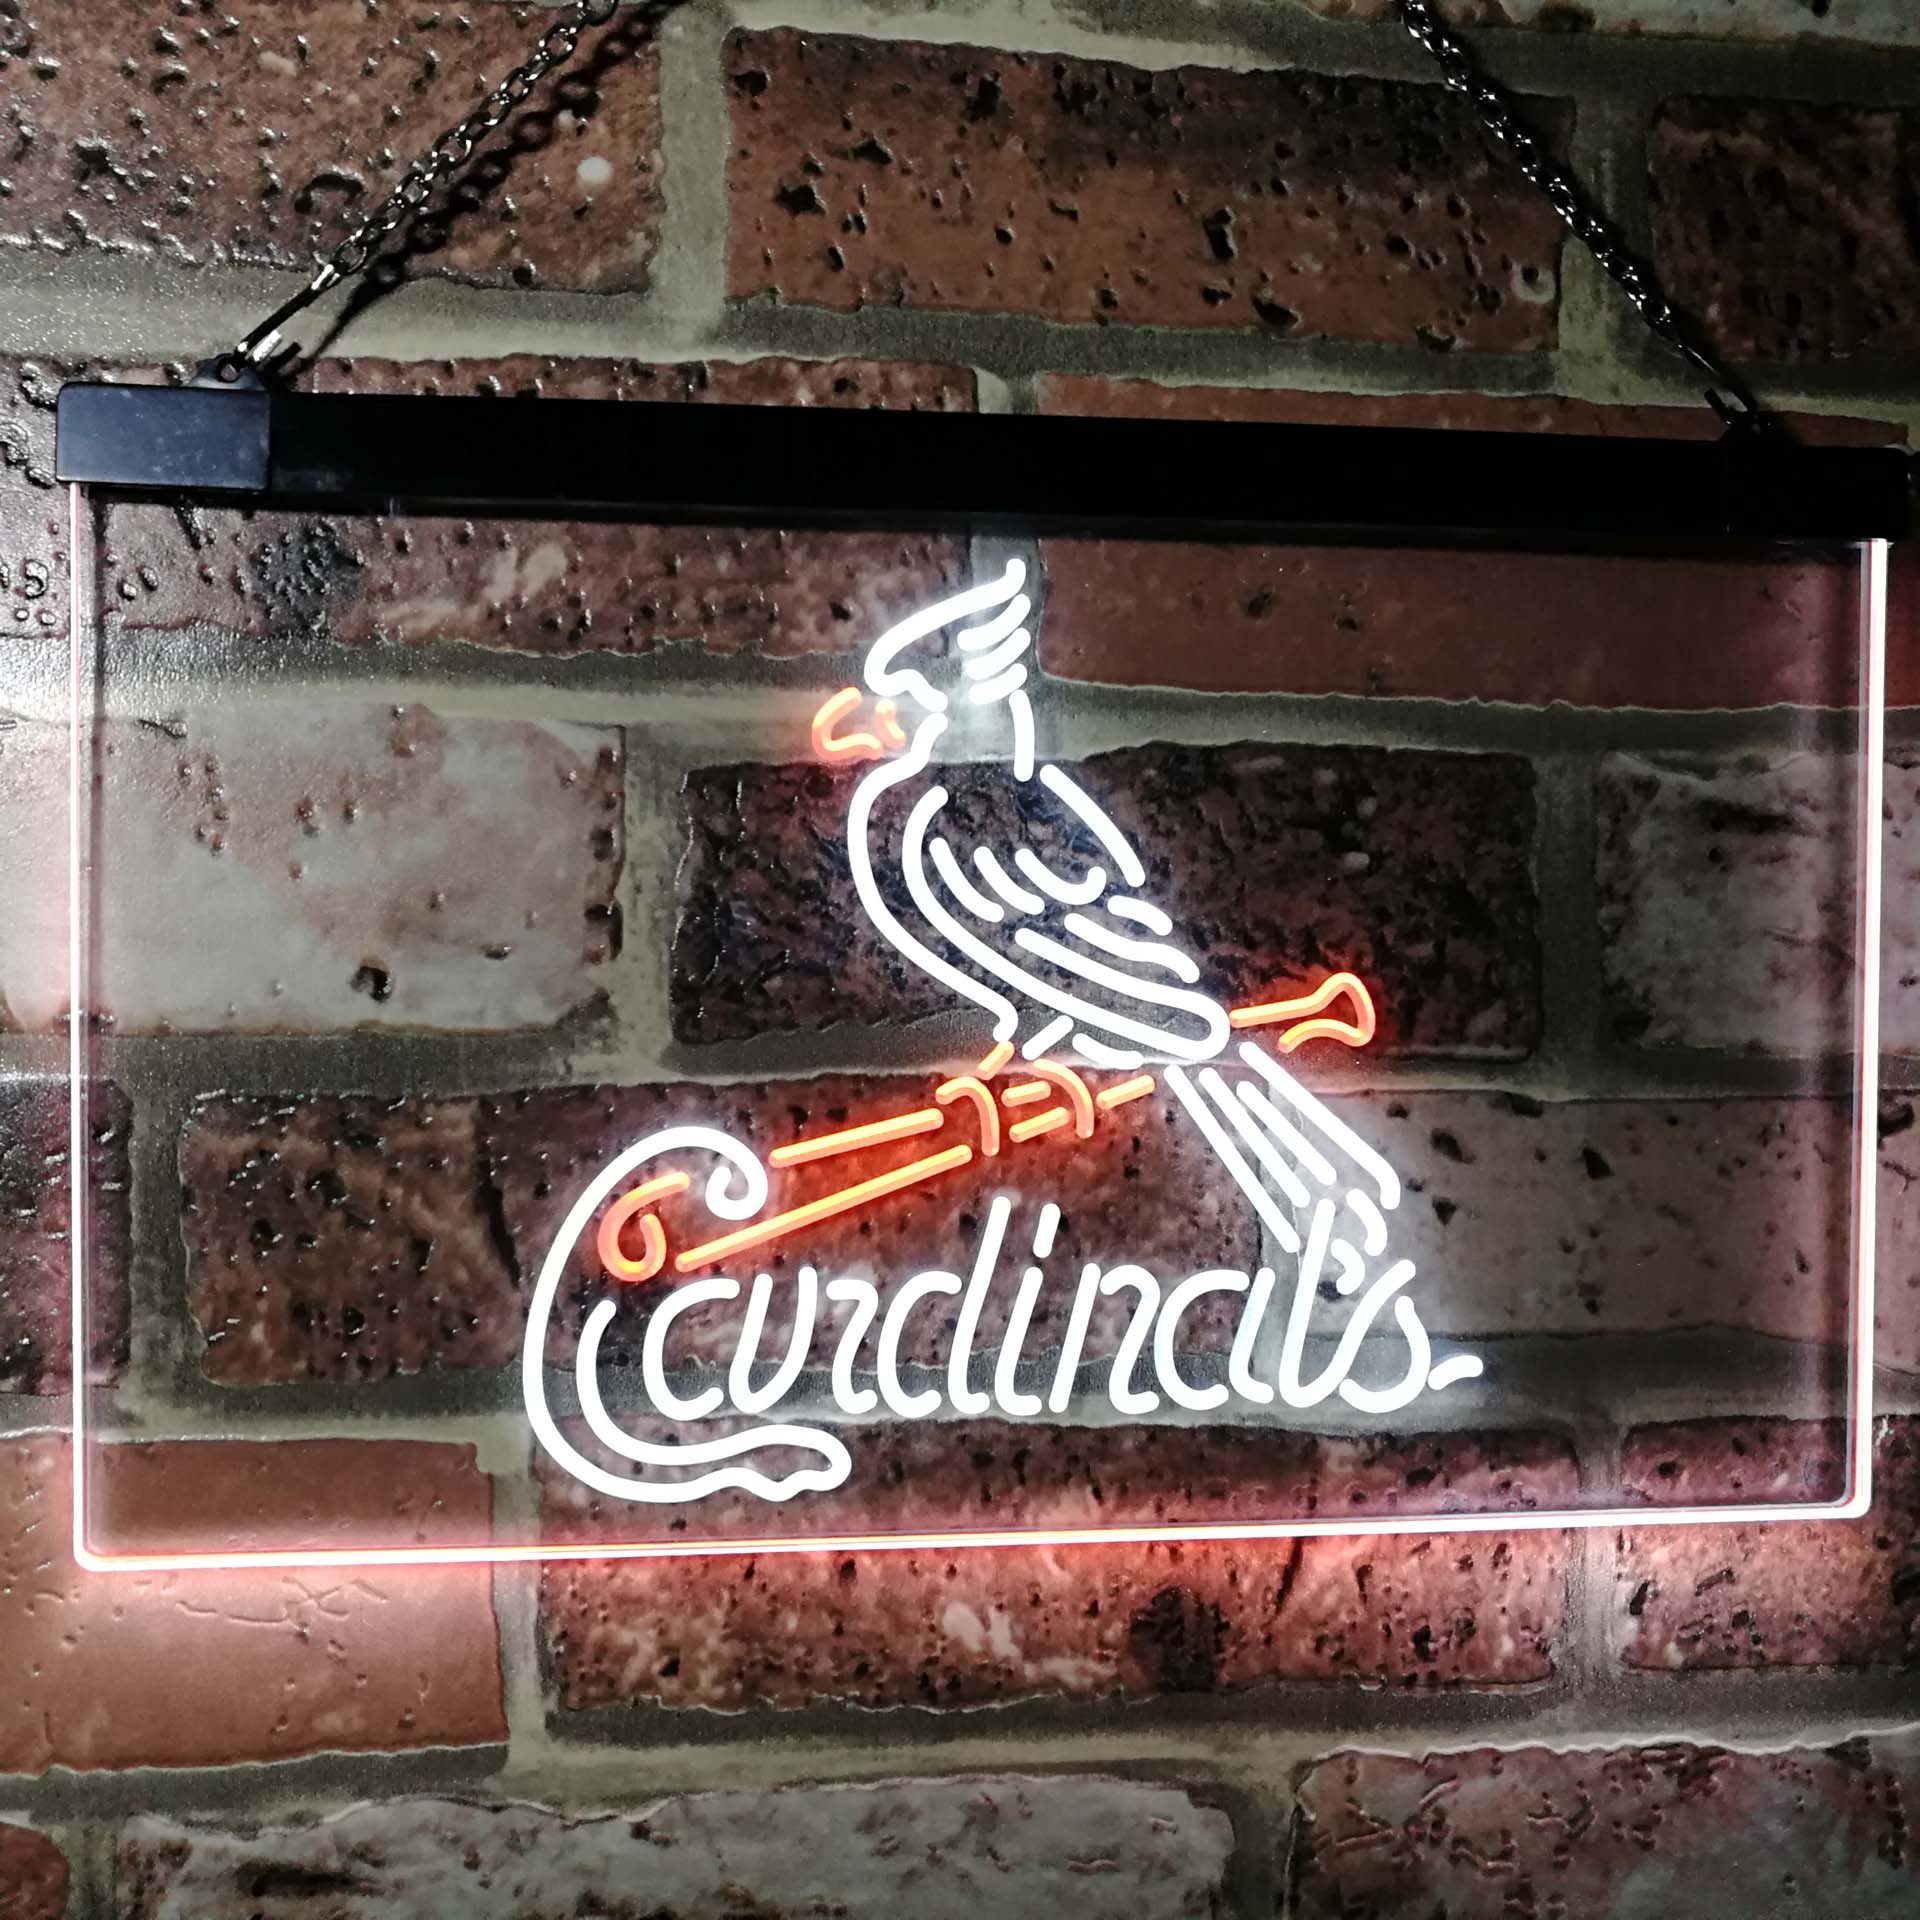 St. Louis Cardinals Dual Color LED Neon Sign ProLedSign